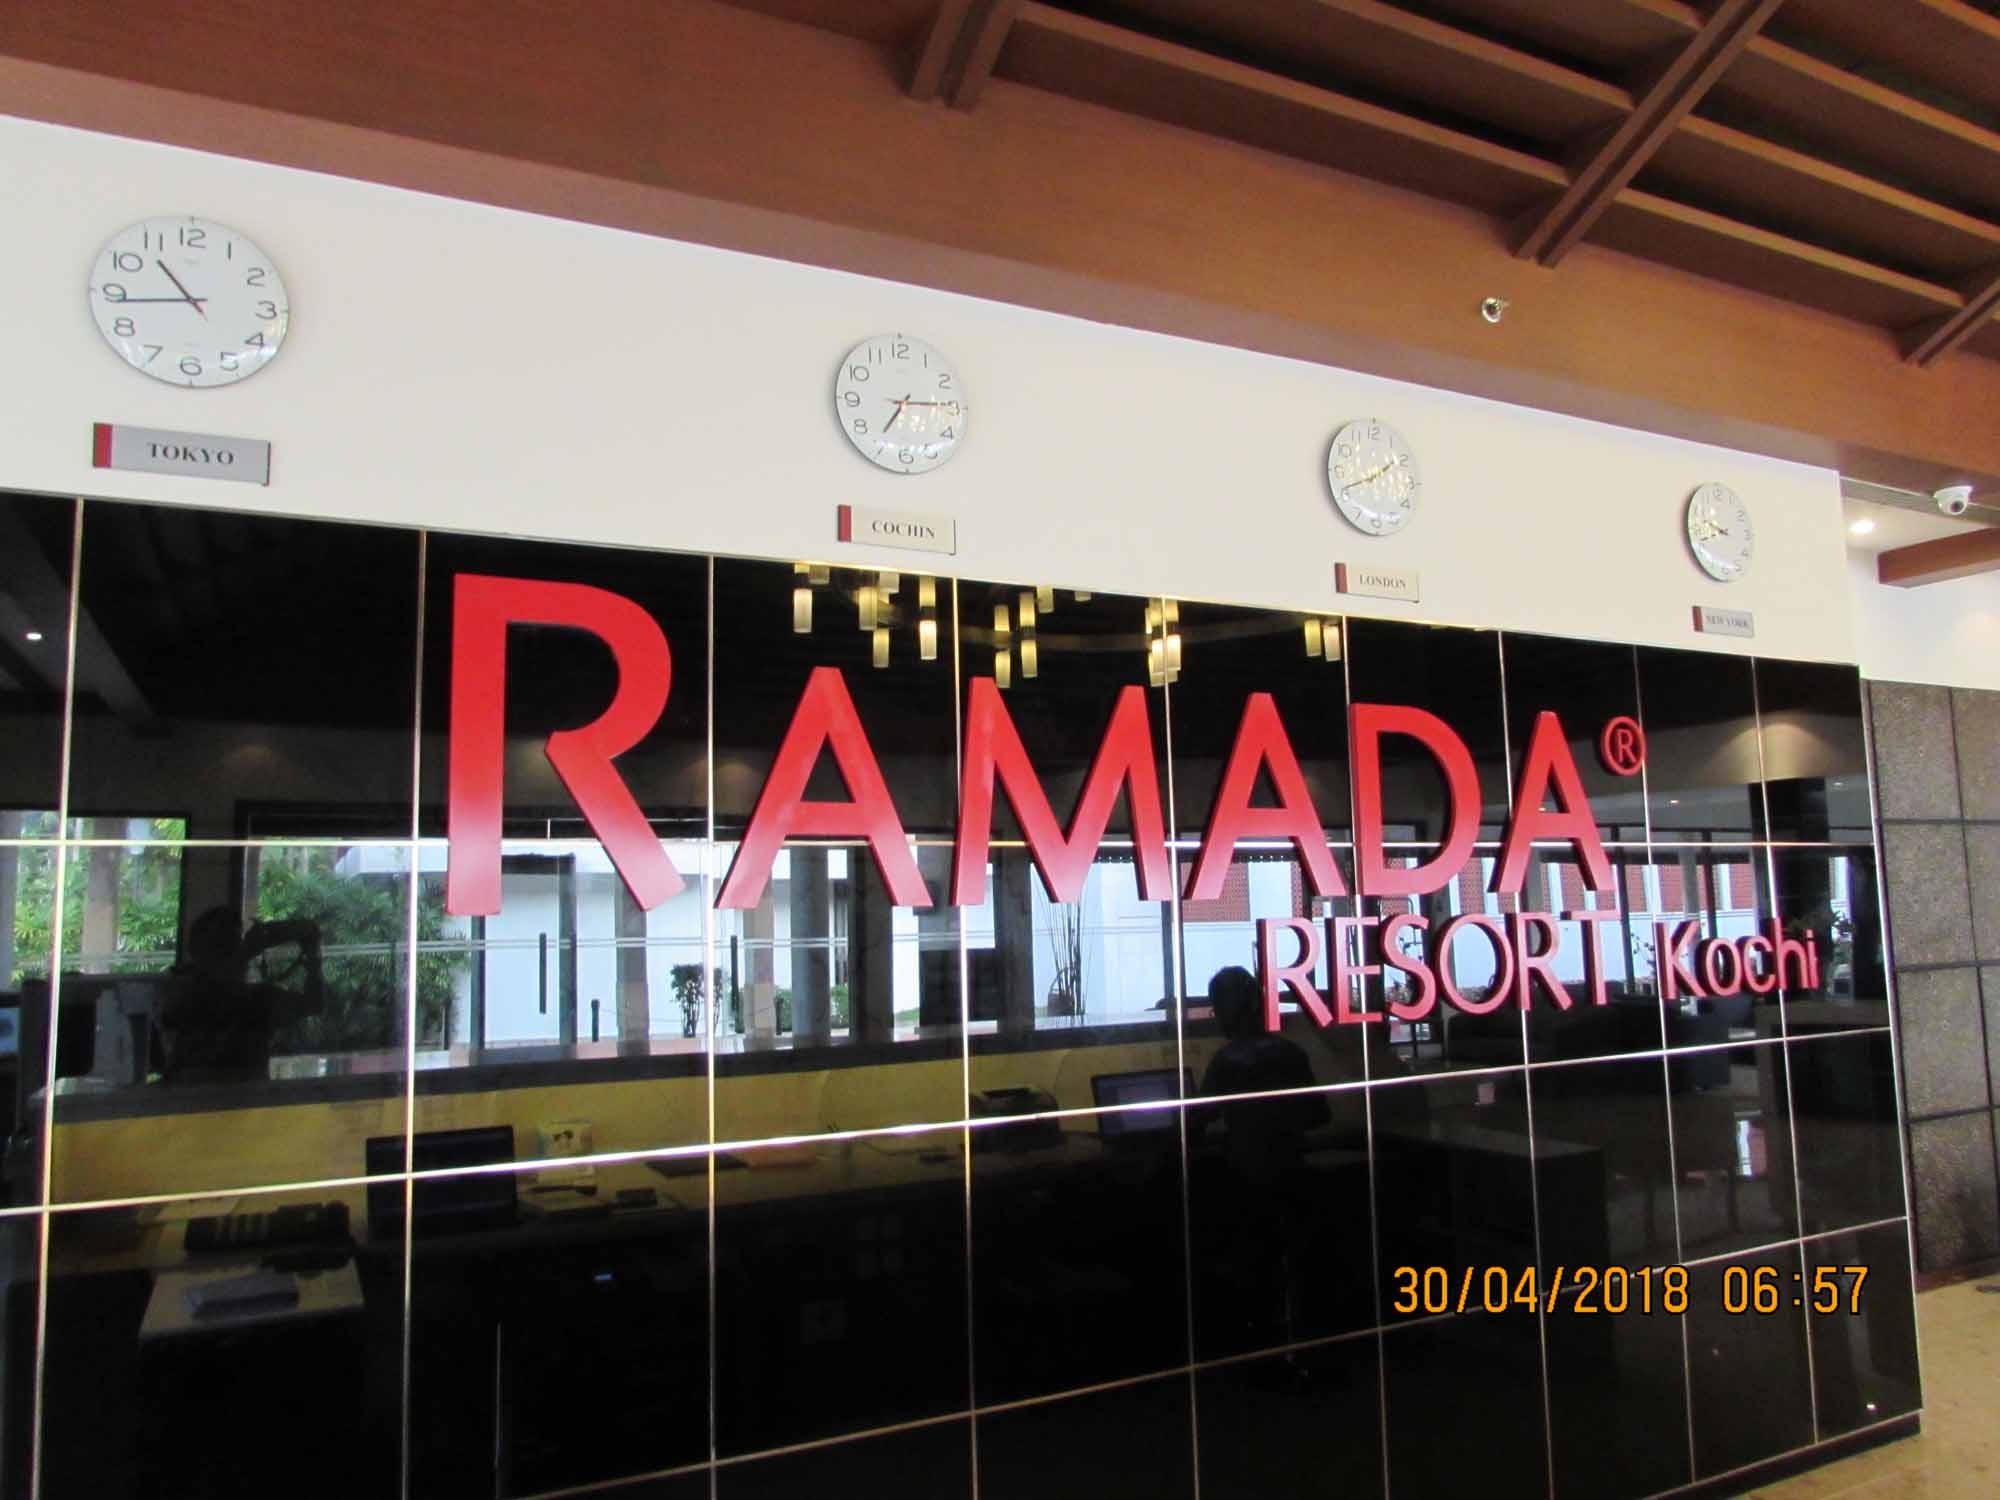 Ramada Resort, Cochin, Kerala, India